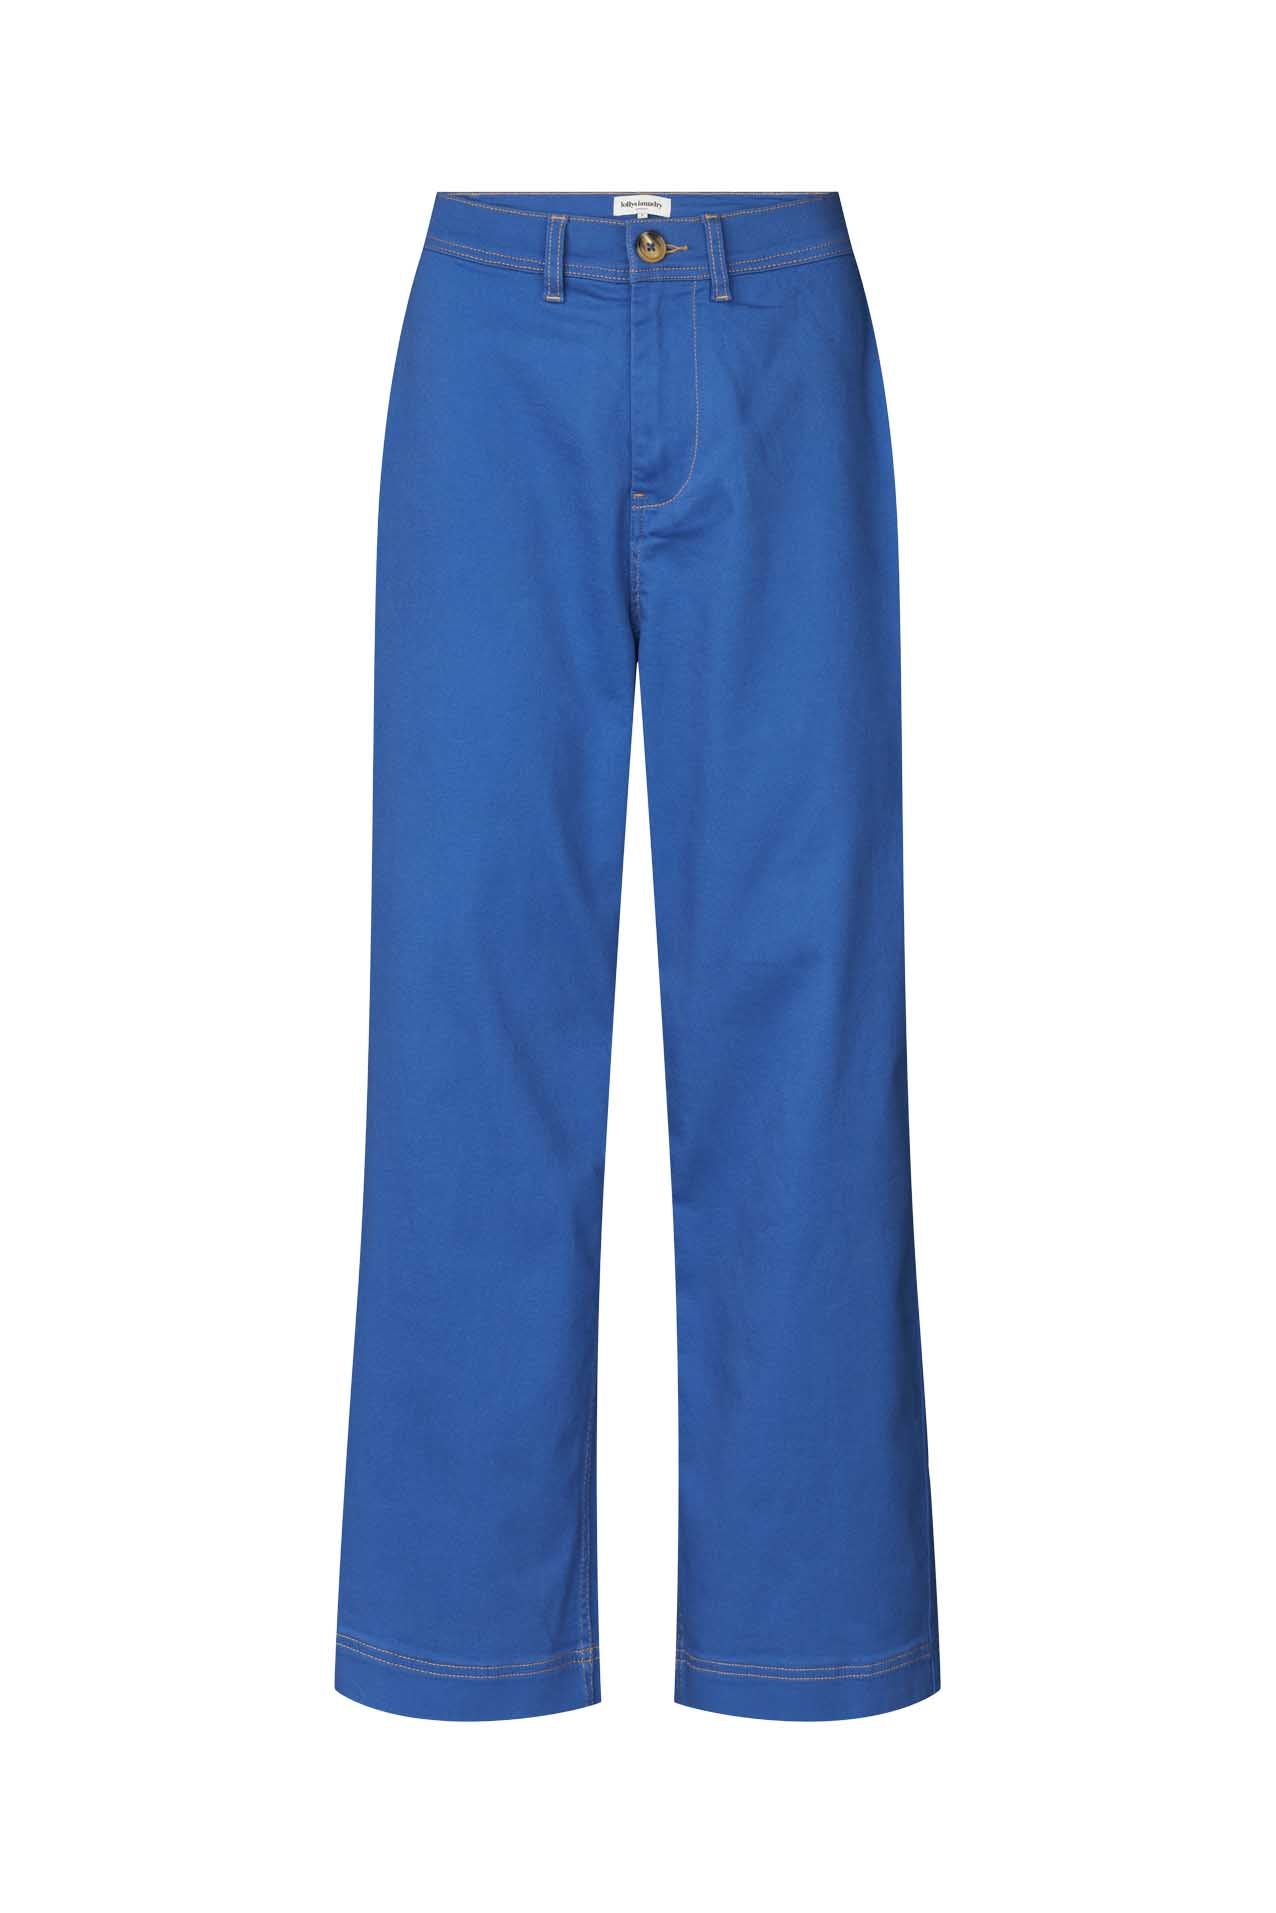 Lollys Laundry Florida Pants - Blue – Wanda Harland